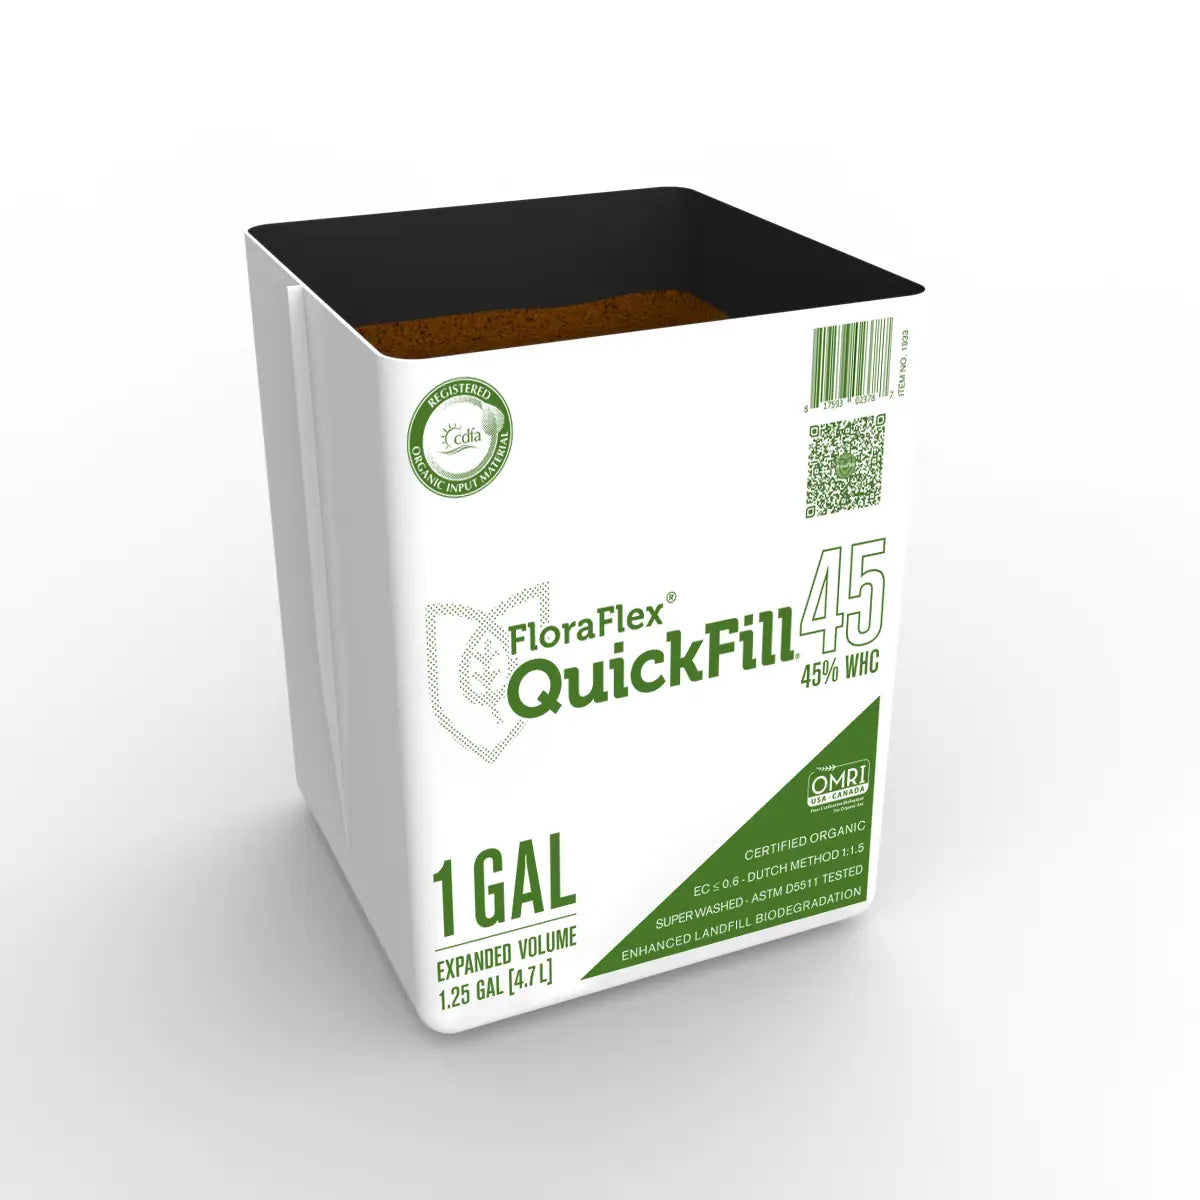 Quickfill 1 gal bag-1 gal